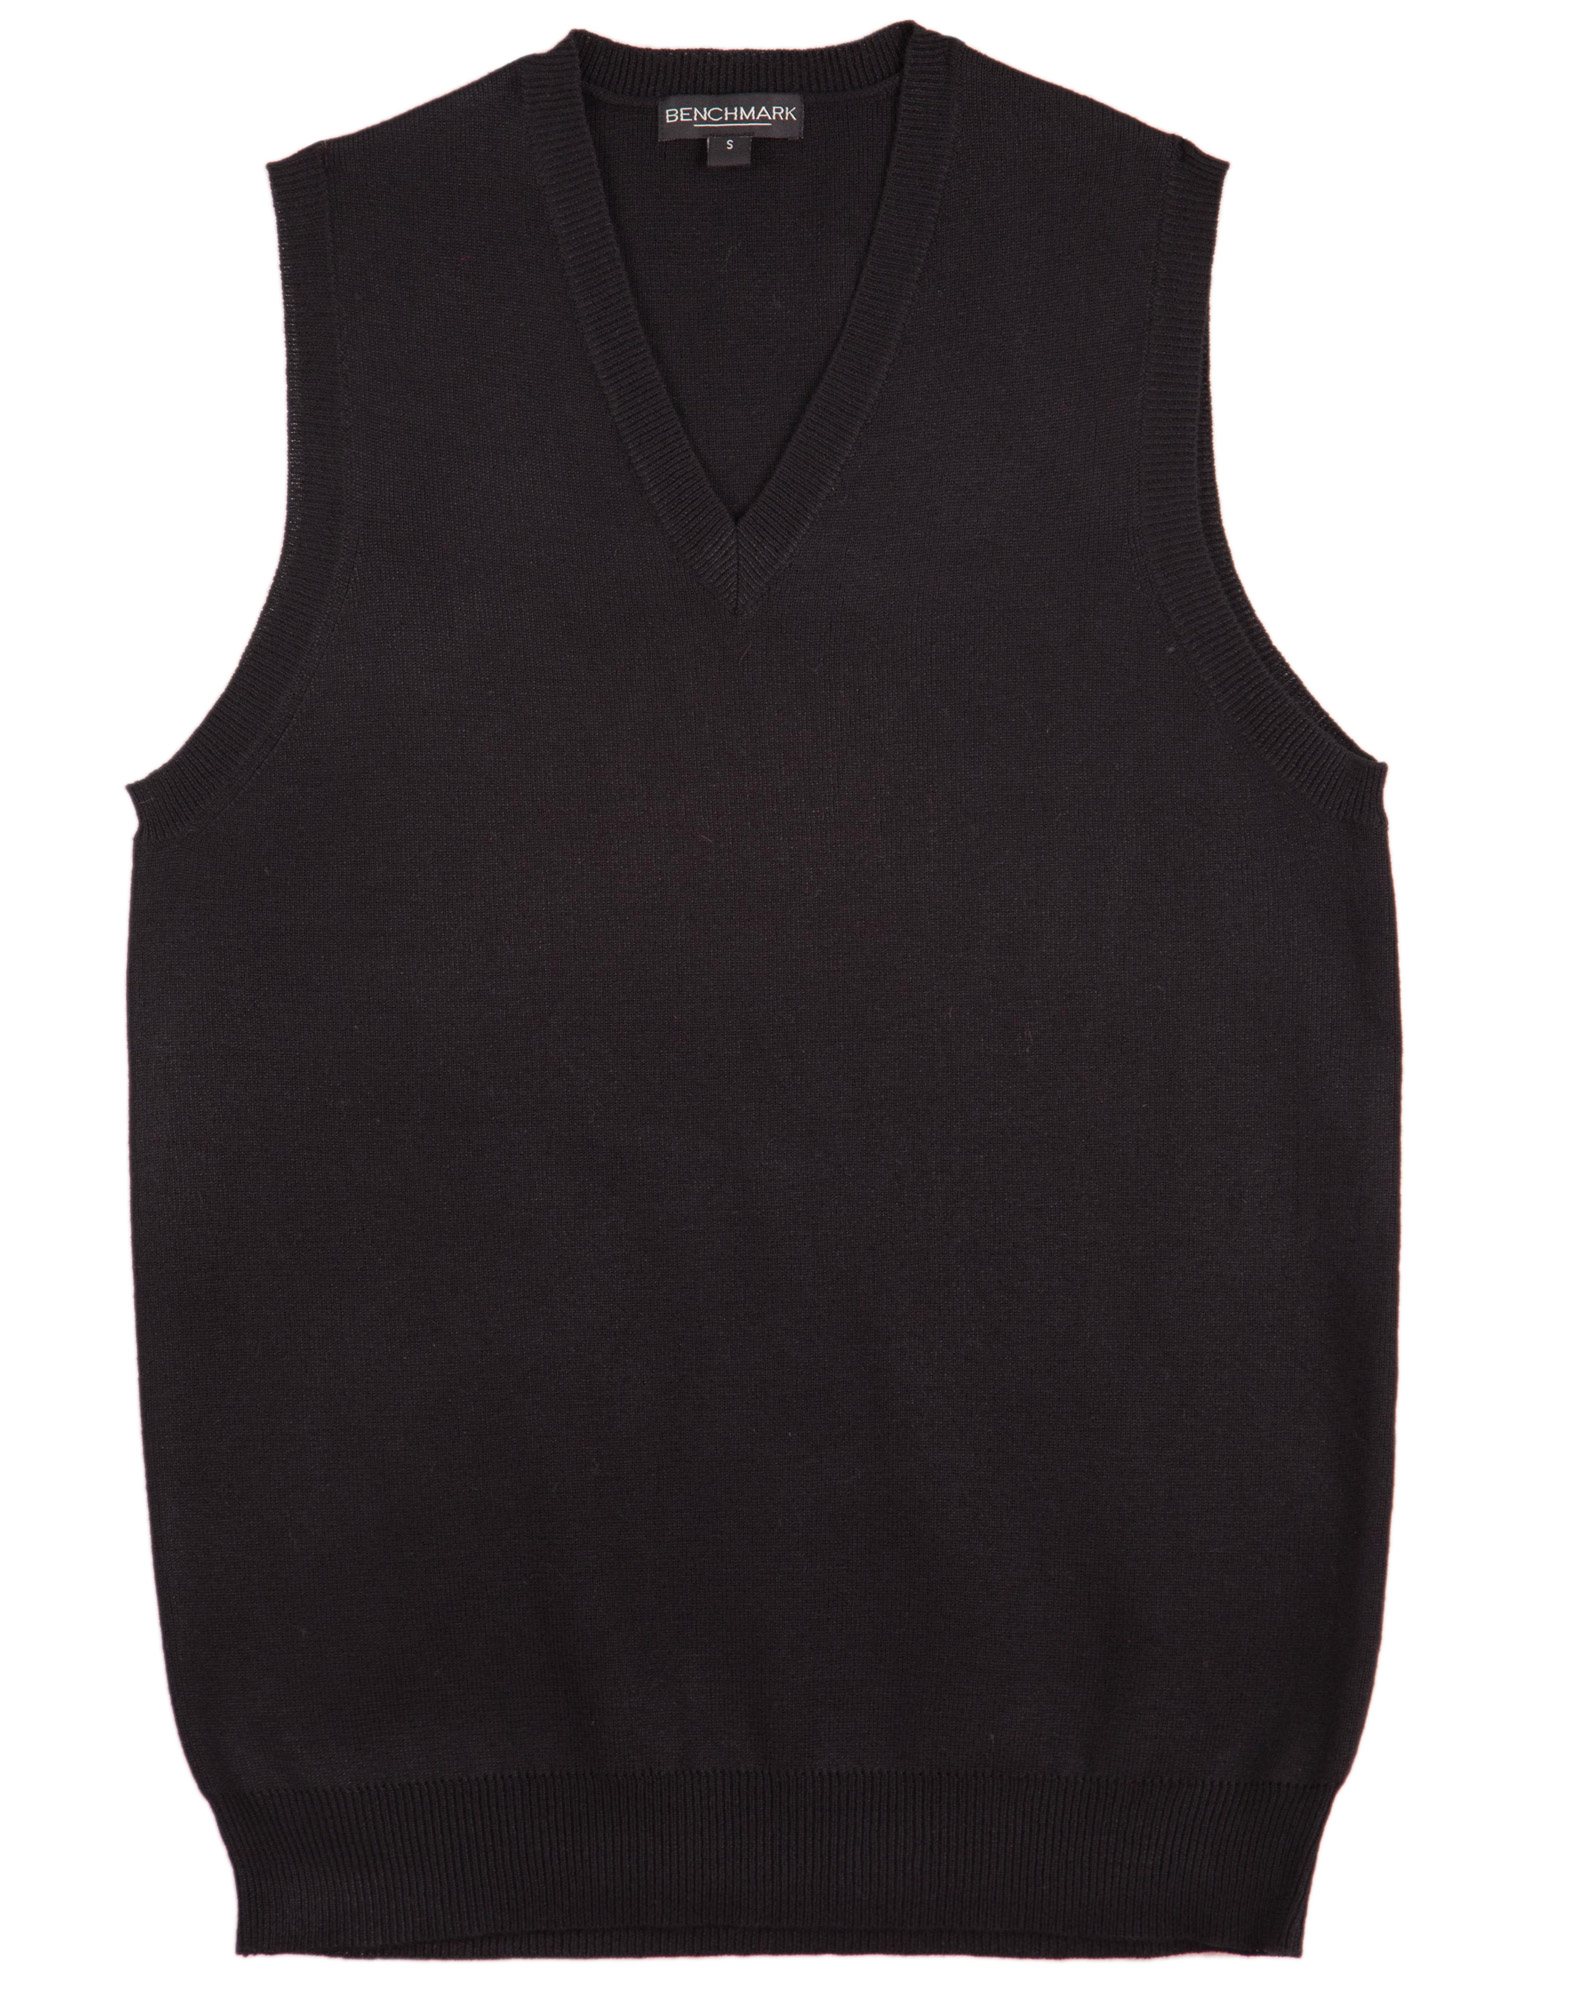 Benchmark M9601 Womens V-Neck Vest | Fast Clothing